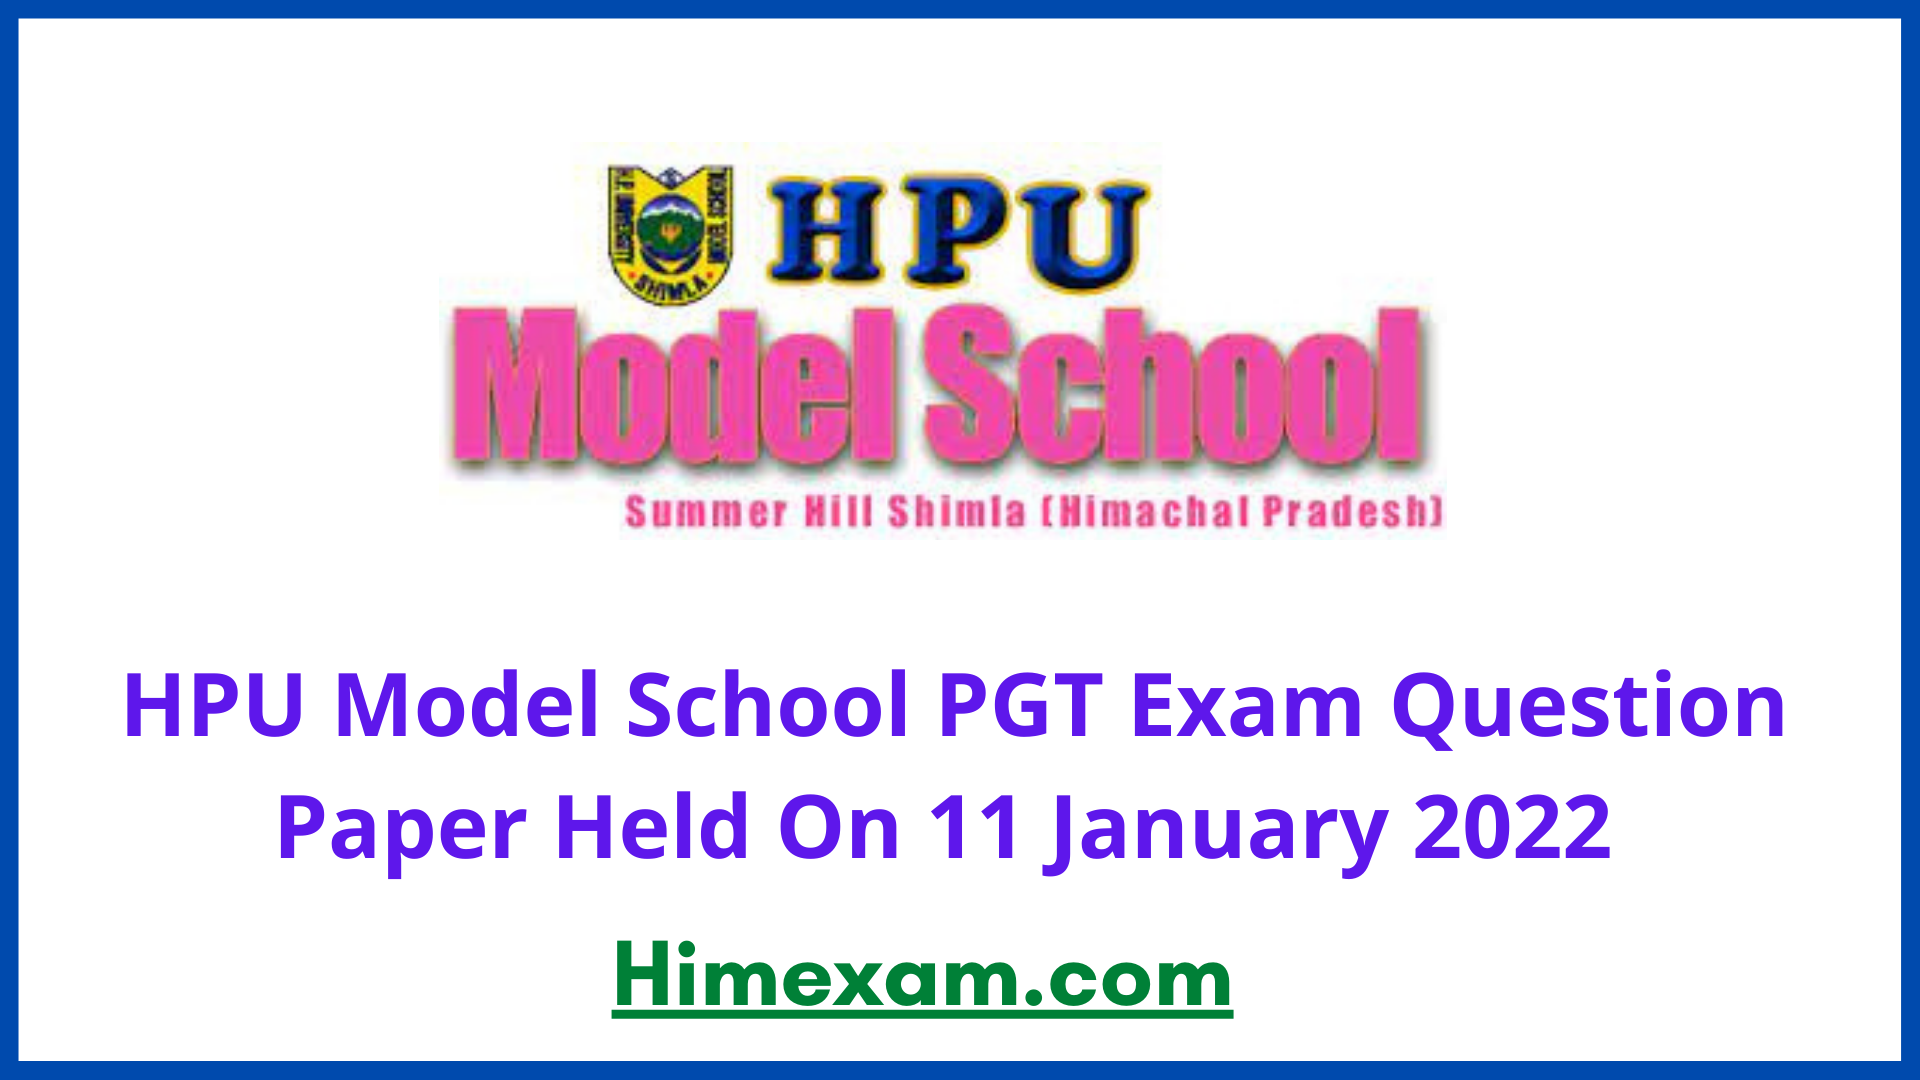 HPU Model School PGT Exam Question Paper Held On 11 January 2022